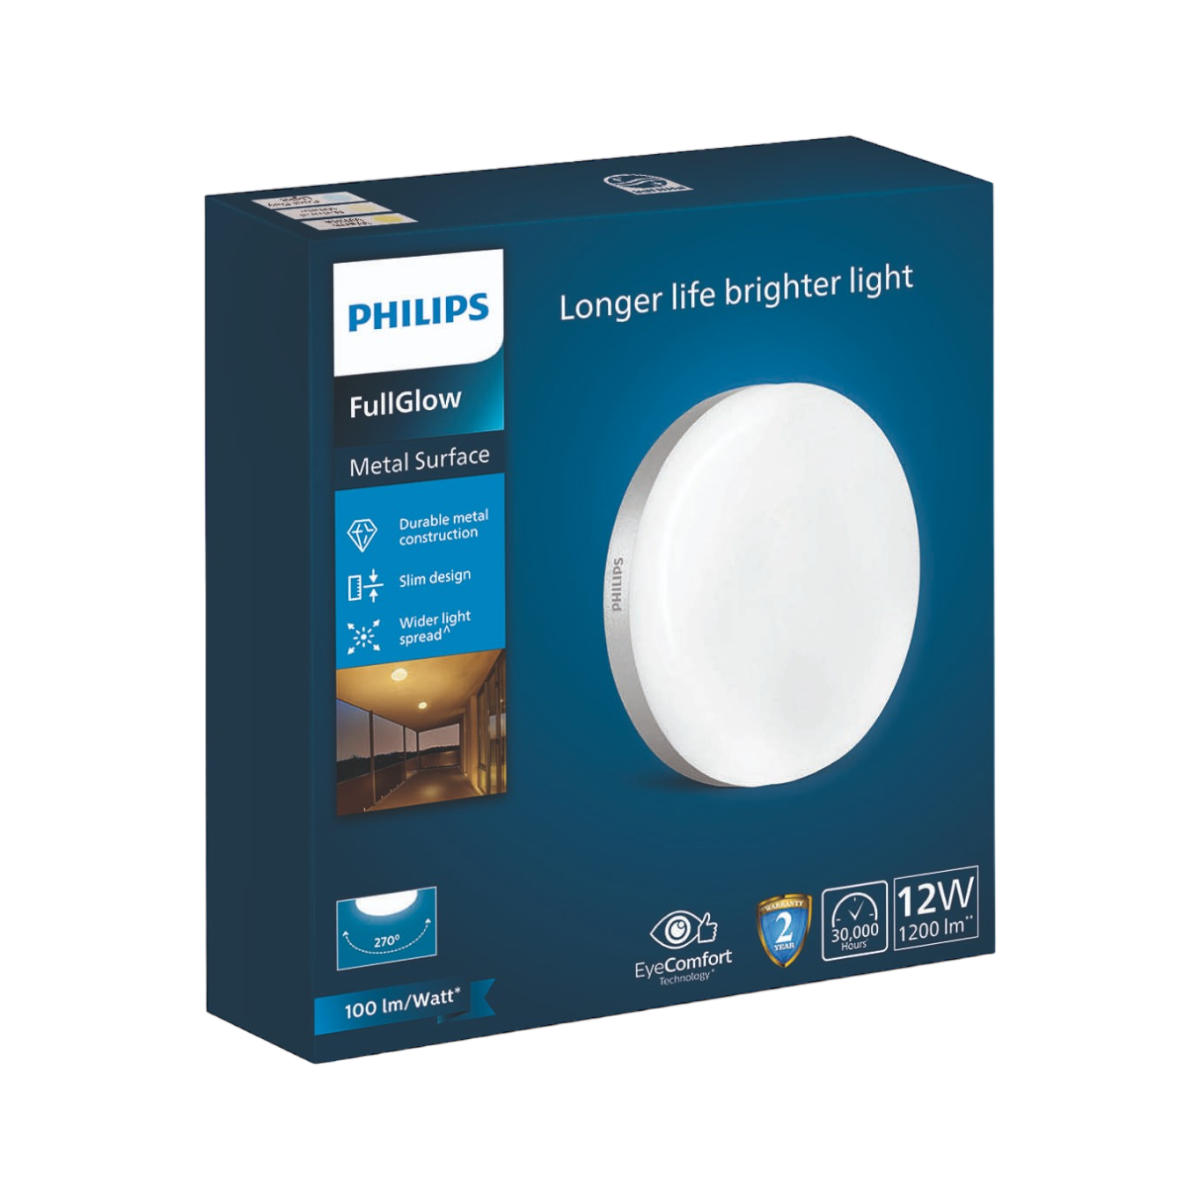 Philips Full Glow LED Metal Surface light